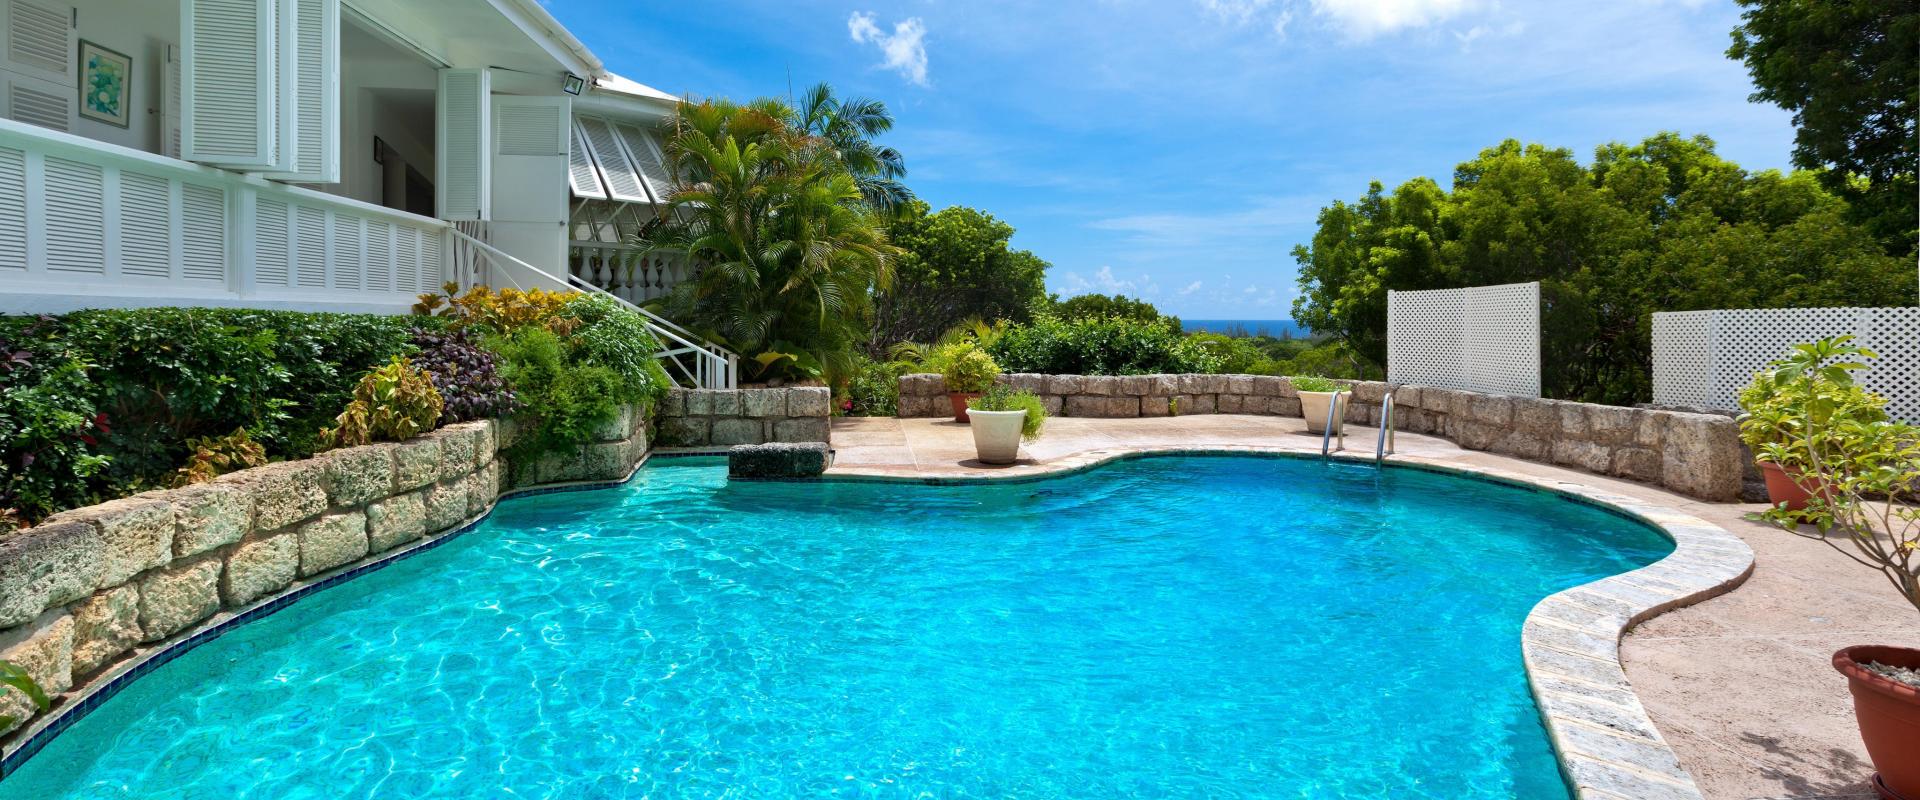 Barbados Holiday Rental Halle Rose Sandy Lane Pool Deck